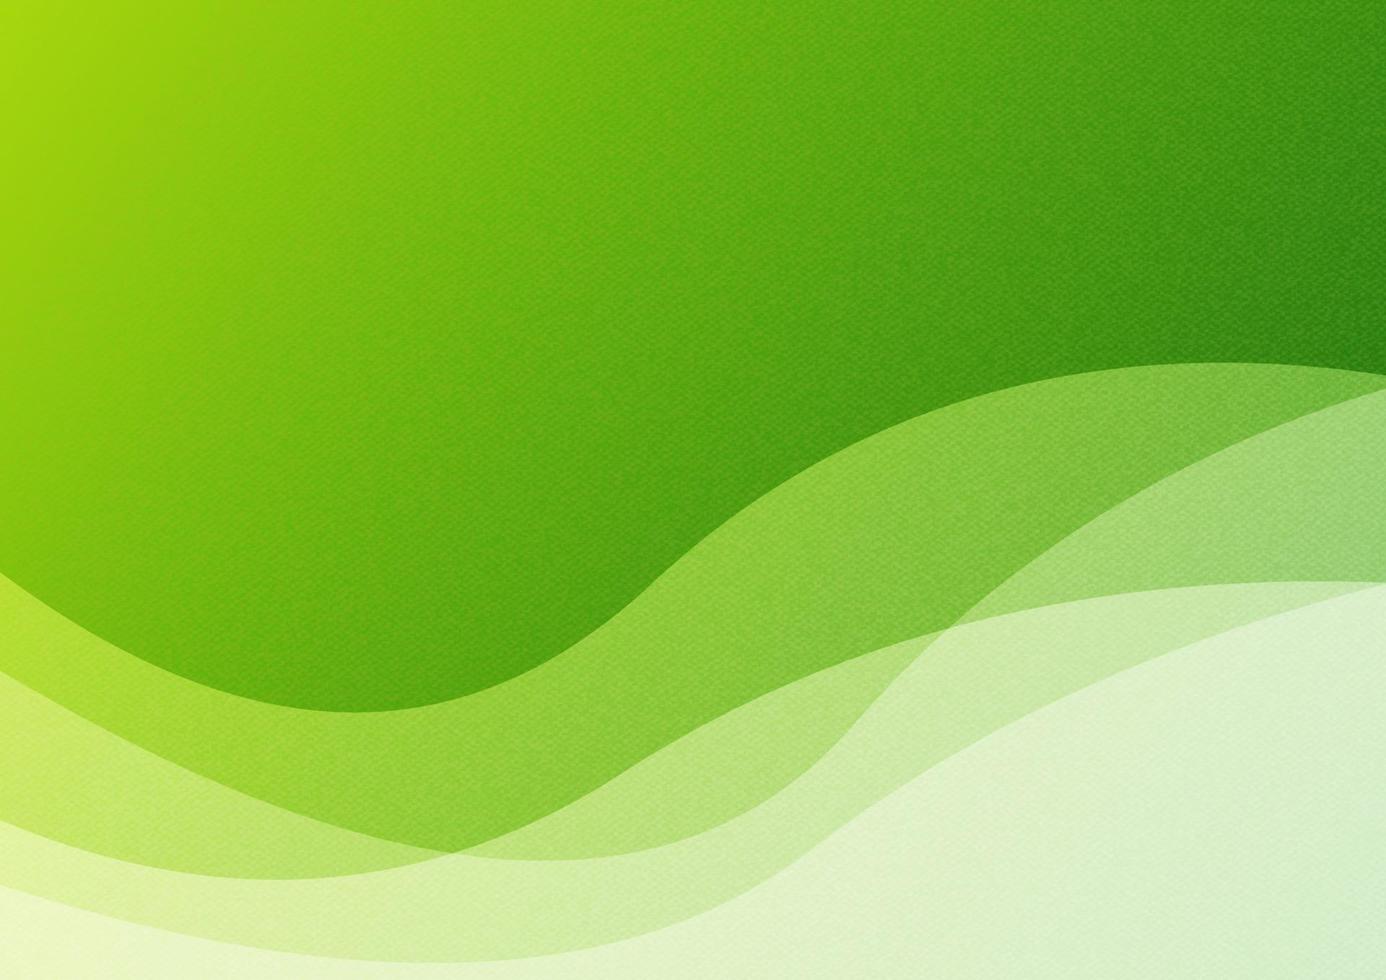 grön bakgrund, abstrakt Vinka på tyg textur. vektor illustration. eps 10